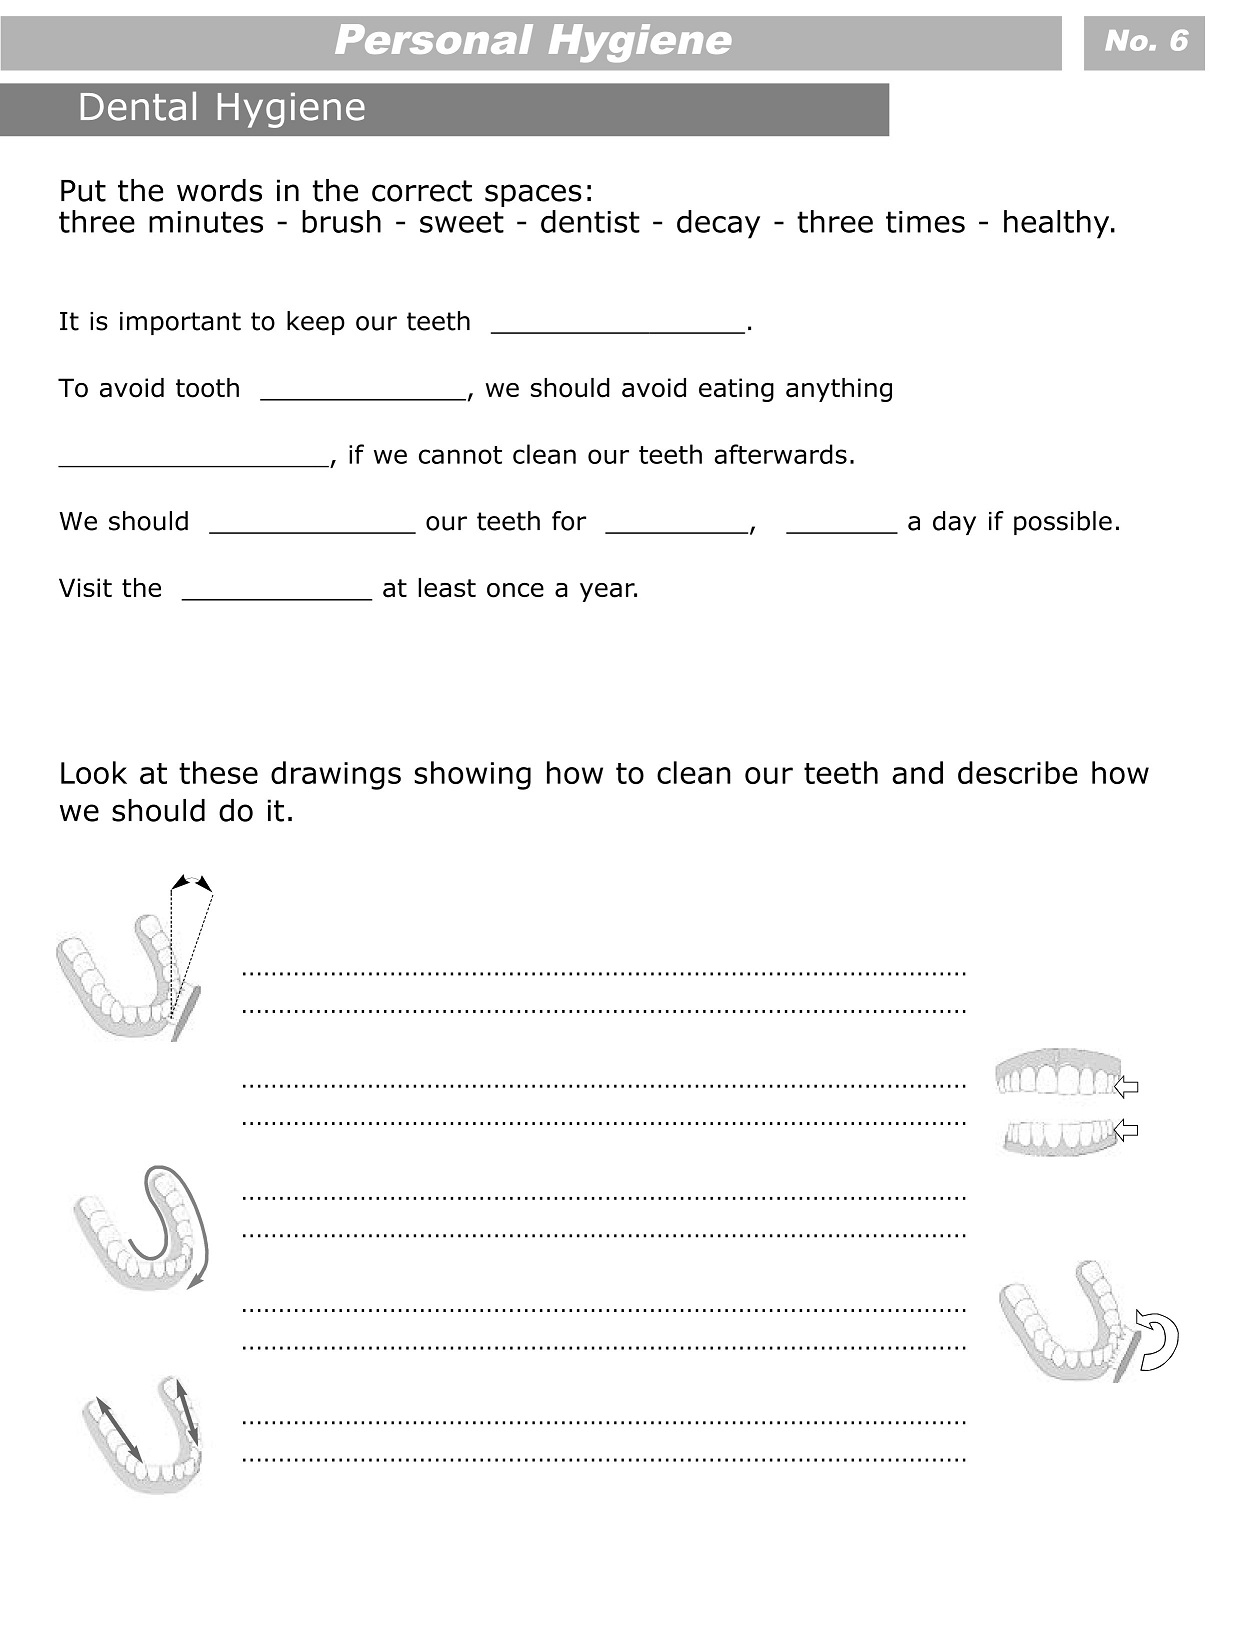 Personal Hygiene Worksheets For Kids Level 3 6 | Personal Hygiene | Printable Personal Hygiene Worksheets For Kids